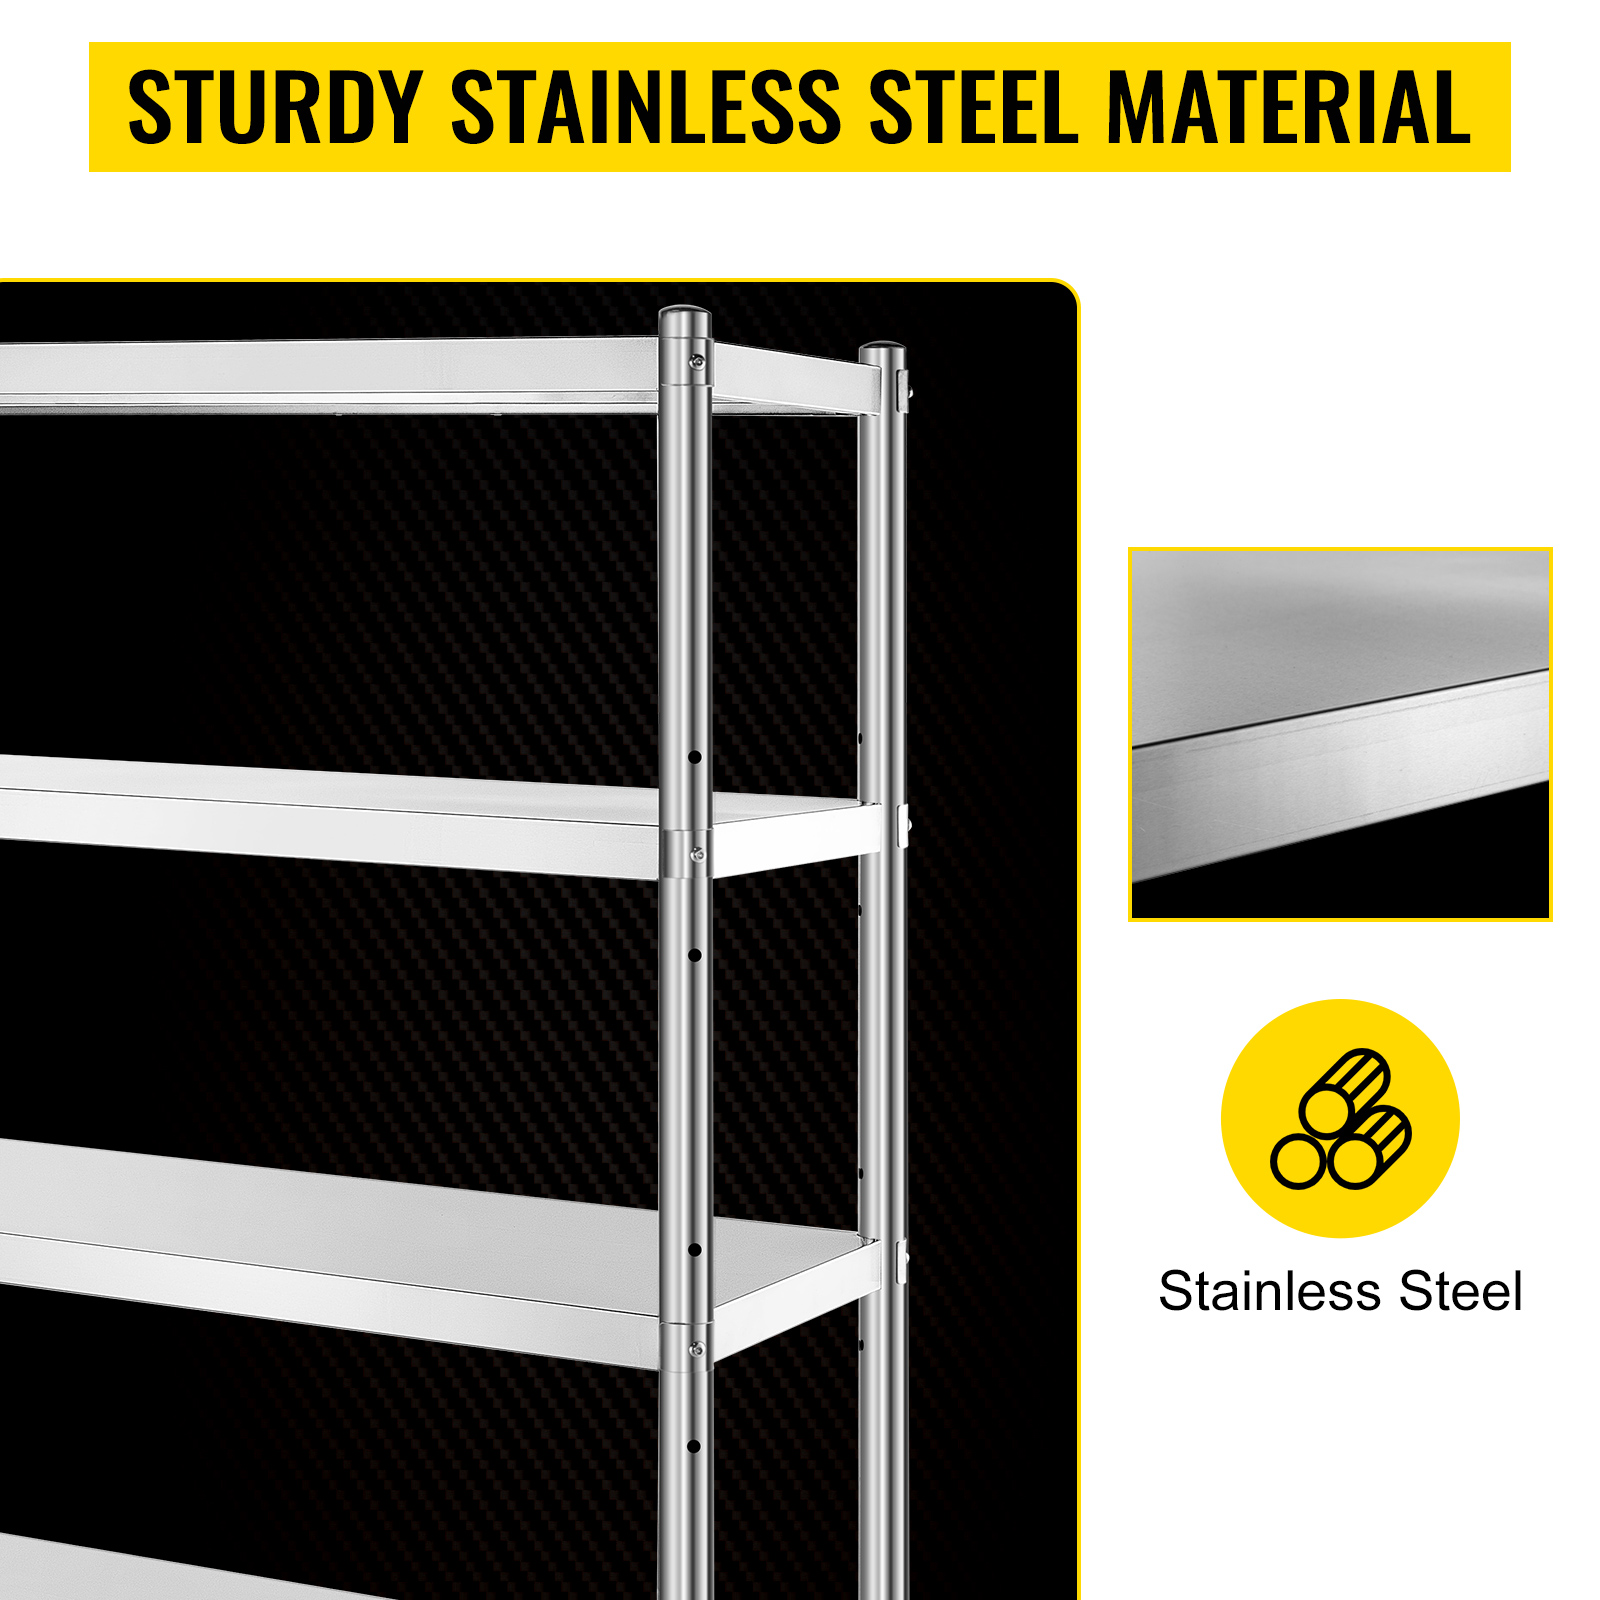 5-Tier Adjustable Steel Shelving Unit, Garage Storage Shelving Unit, Heavy Duty Shelving Unit WFX Utility Size: 72 H x 47.2 W x 23.6 D